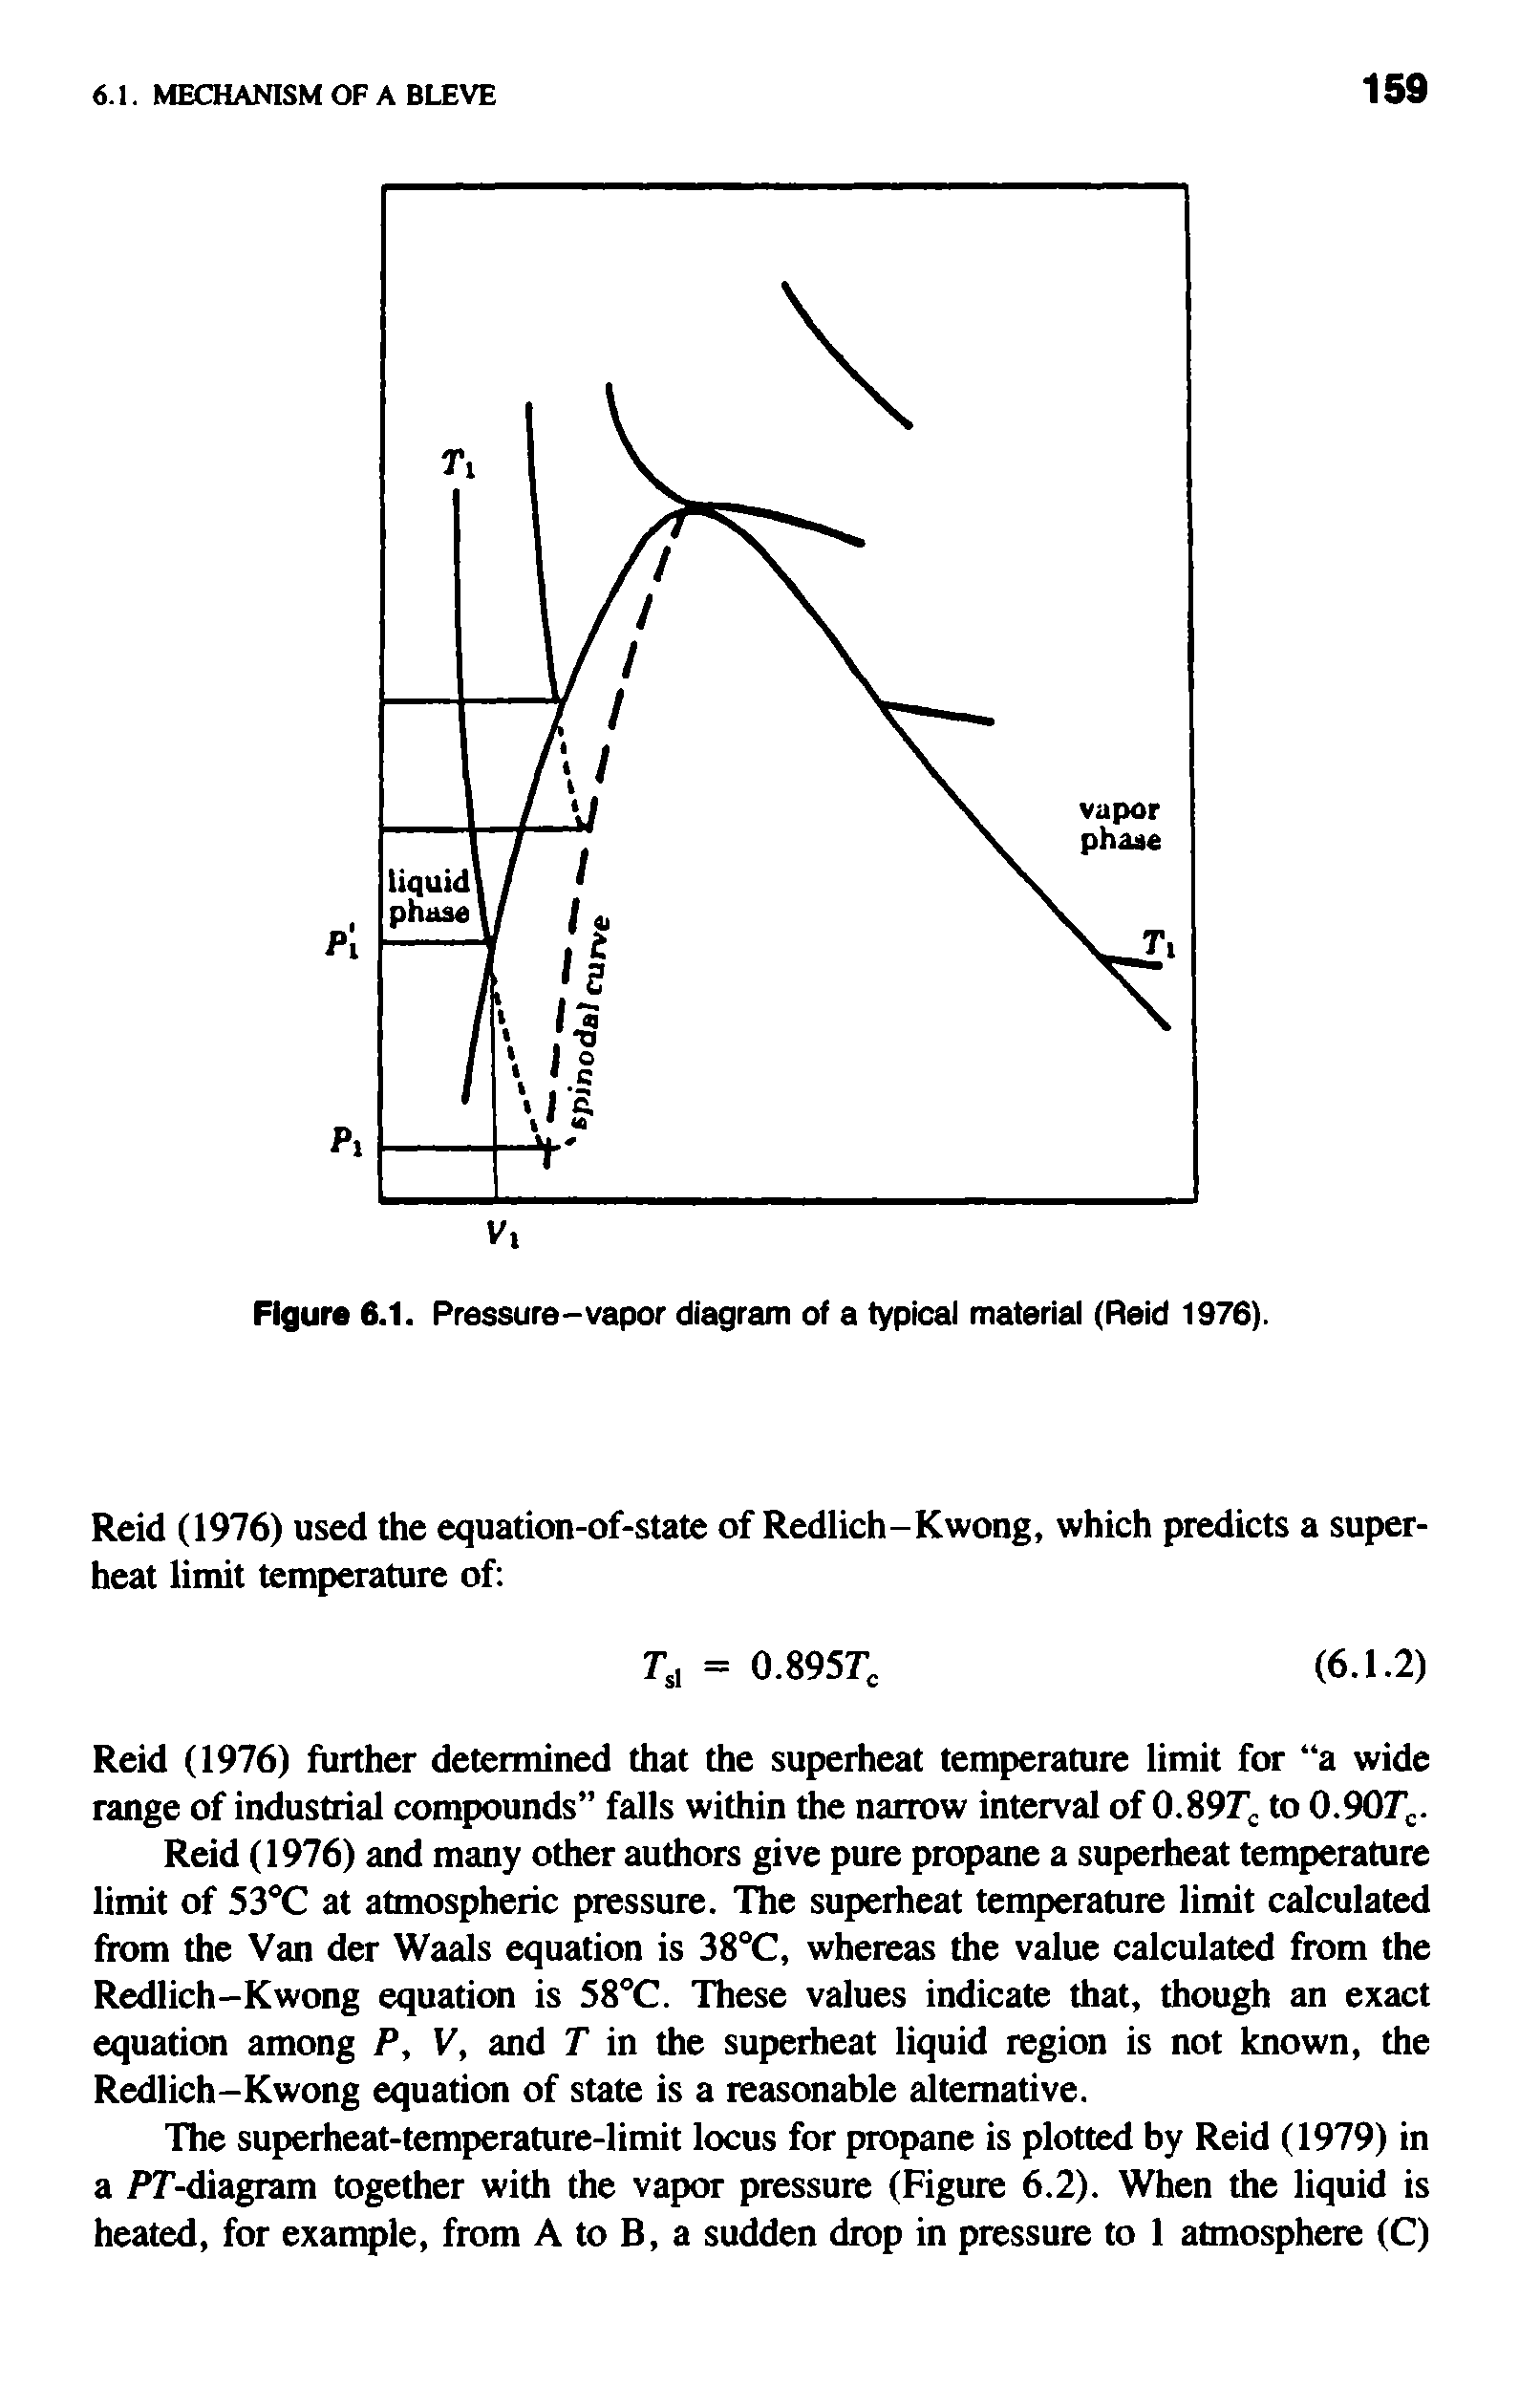 Figure 6.1. Pressure-vapor diagram of a typical material (Reid 1976).